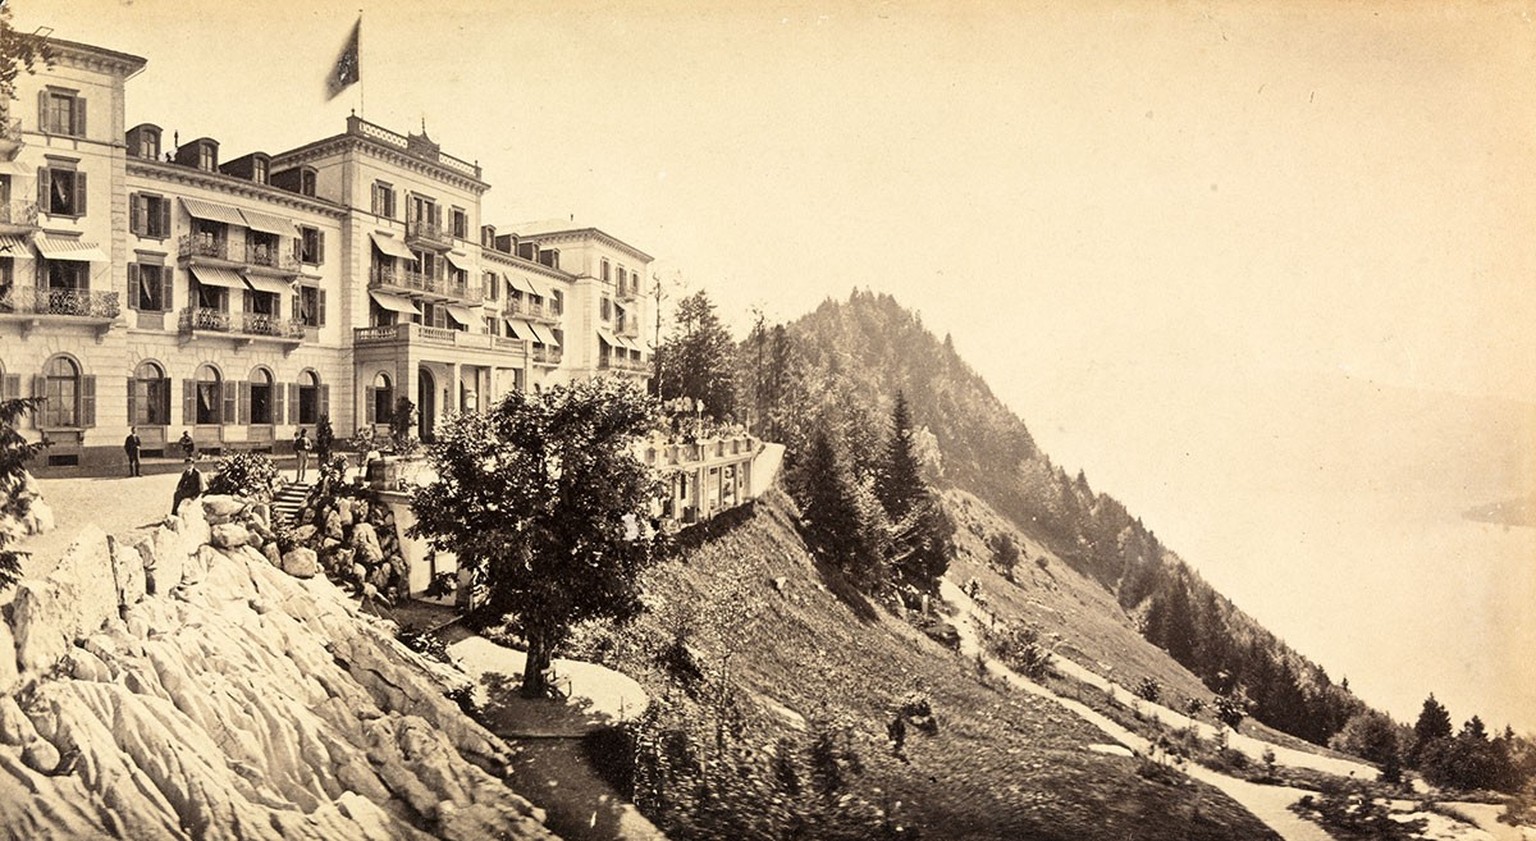 L’hôtel Bürgenstock, vers 1877.
http://doi.org/10.3932/ethz-a-000250341